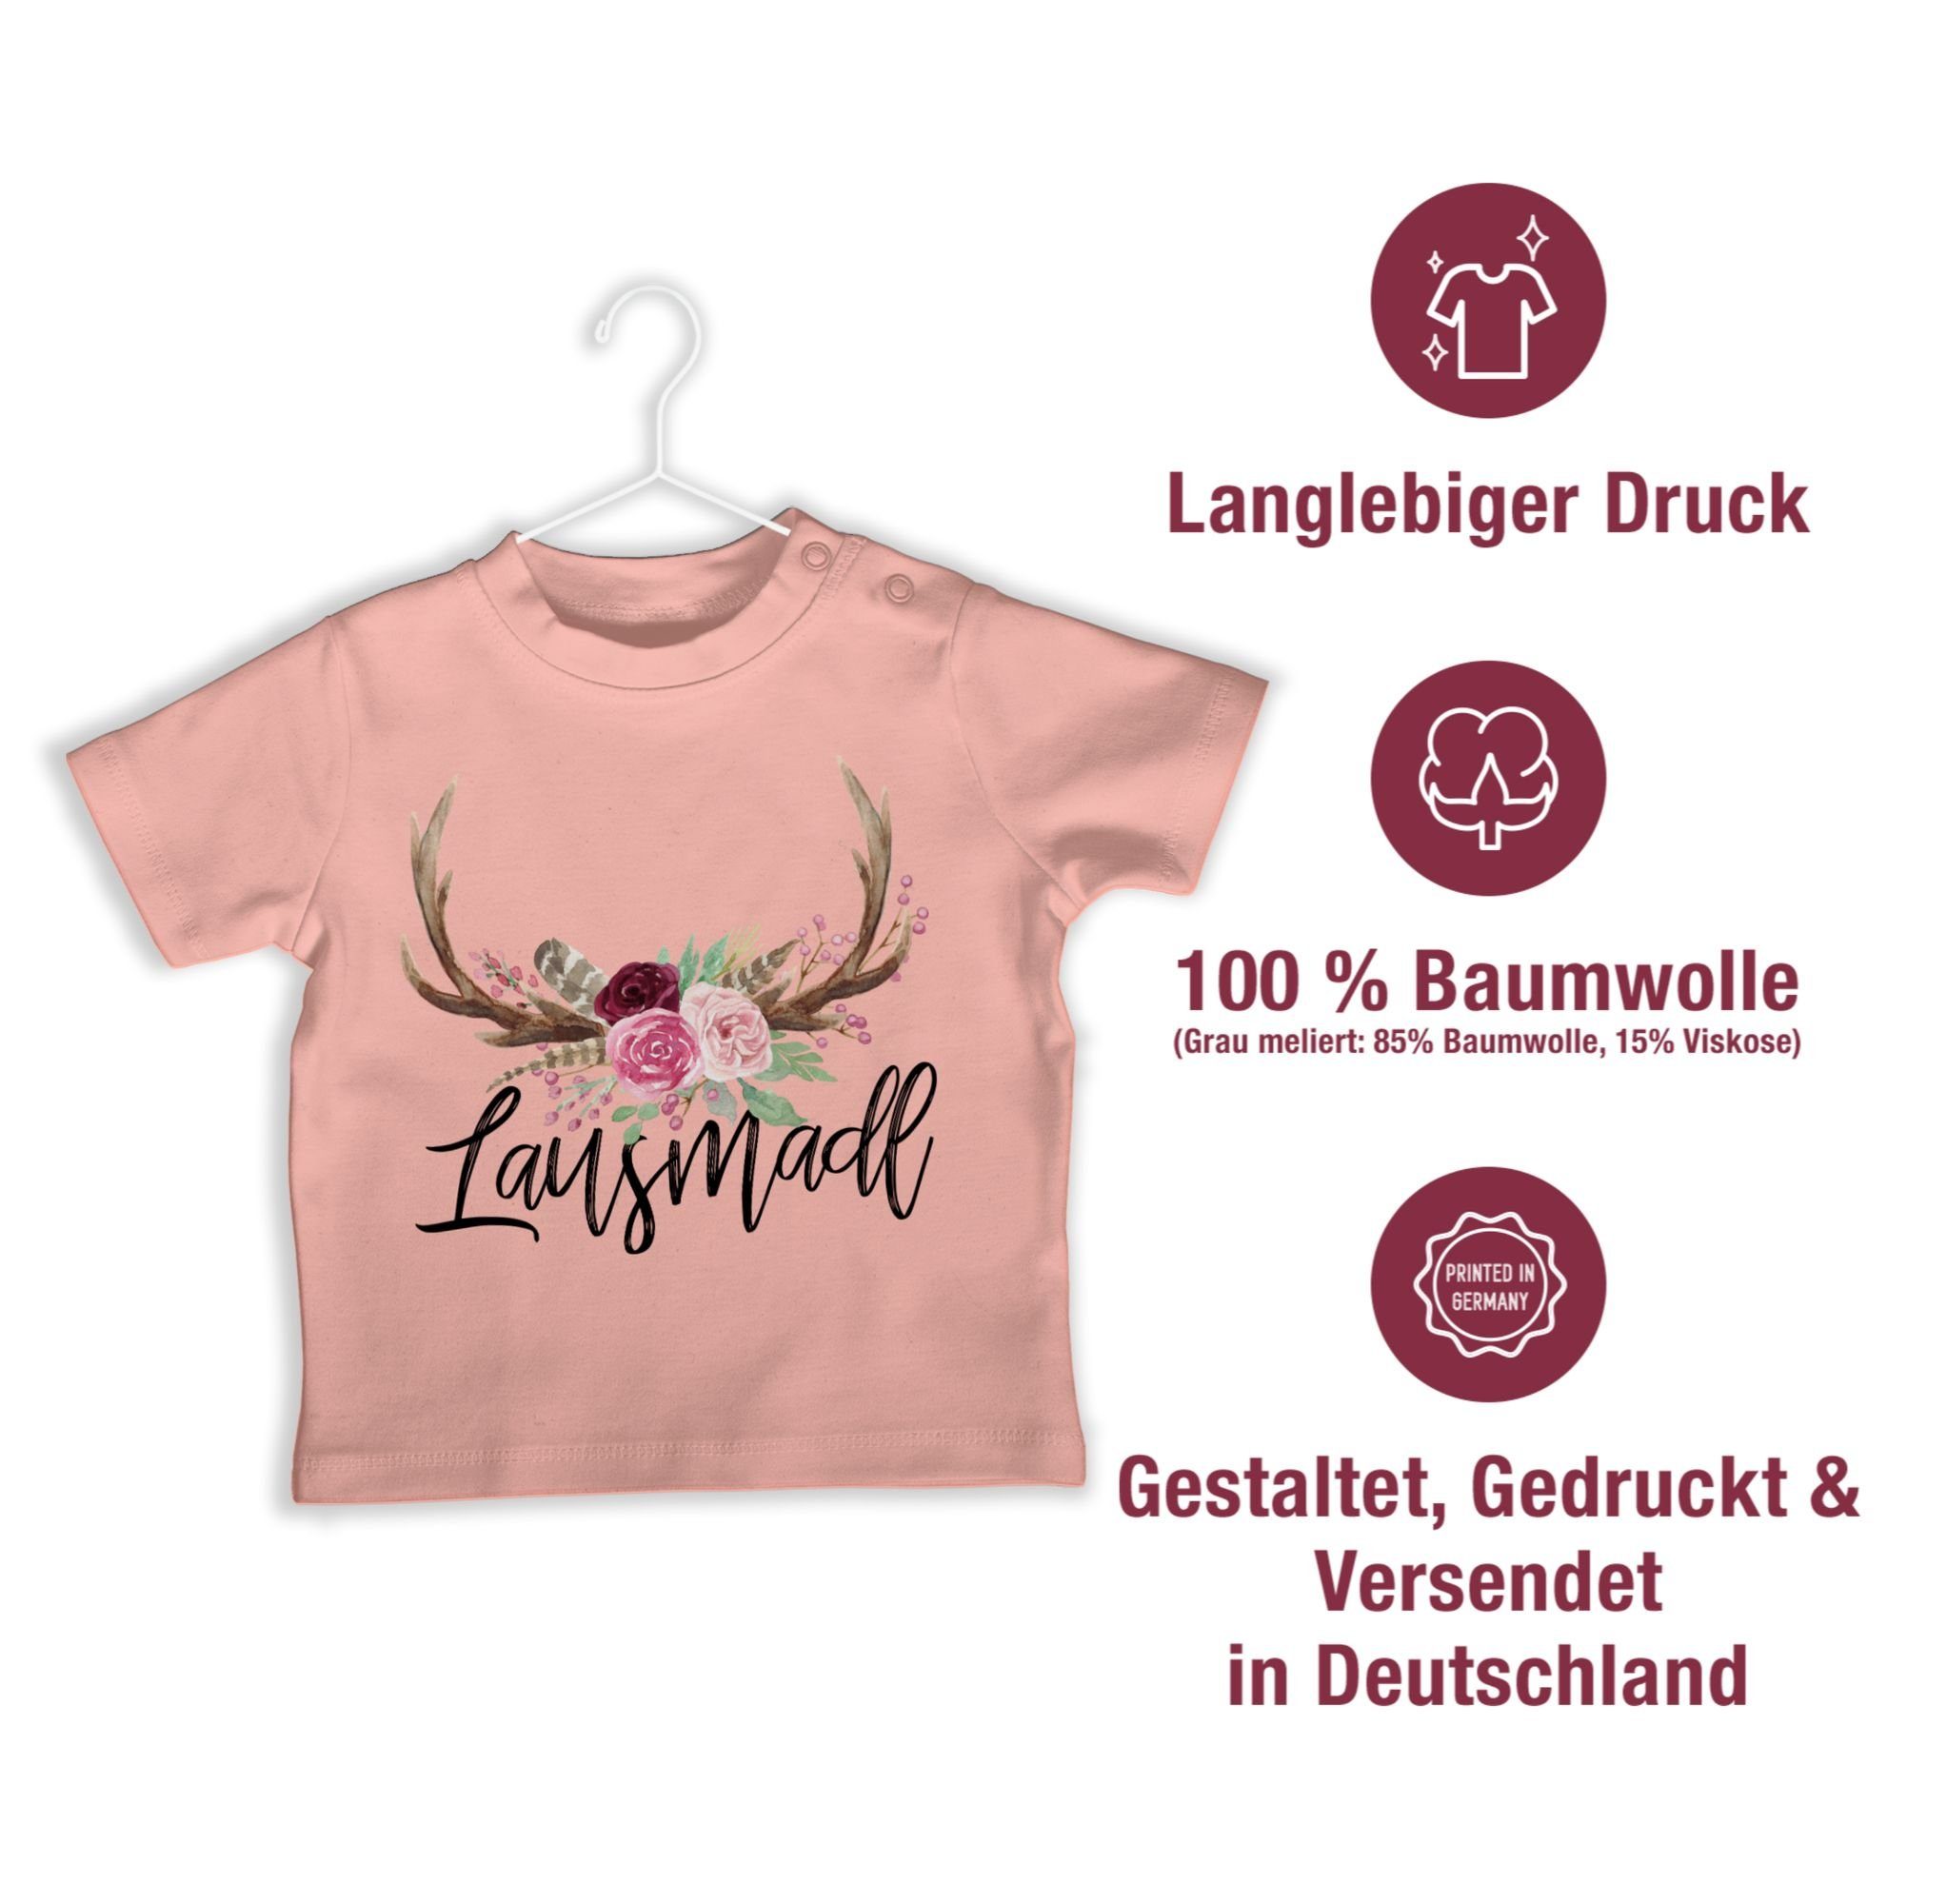 Oktoberfest für T-Shirt Mode 3 Baby Babyrosa Shirtracer Lausmadl Outfit Hirschgeweih